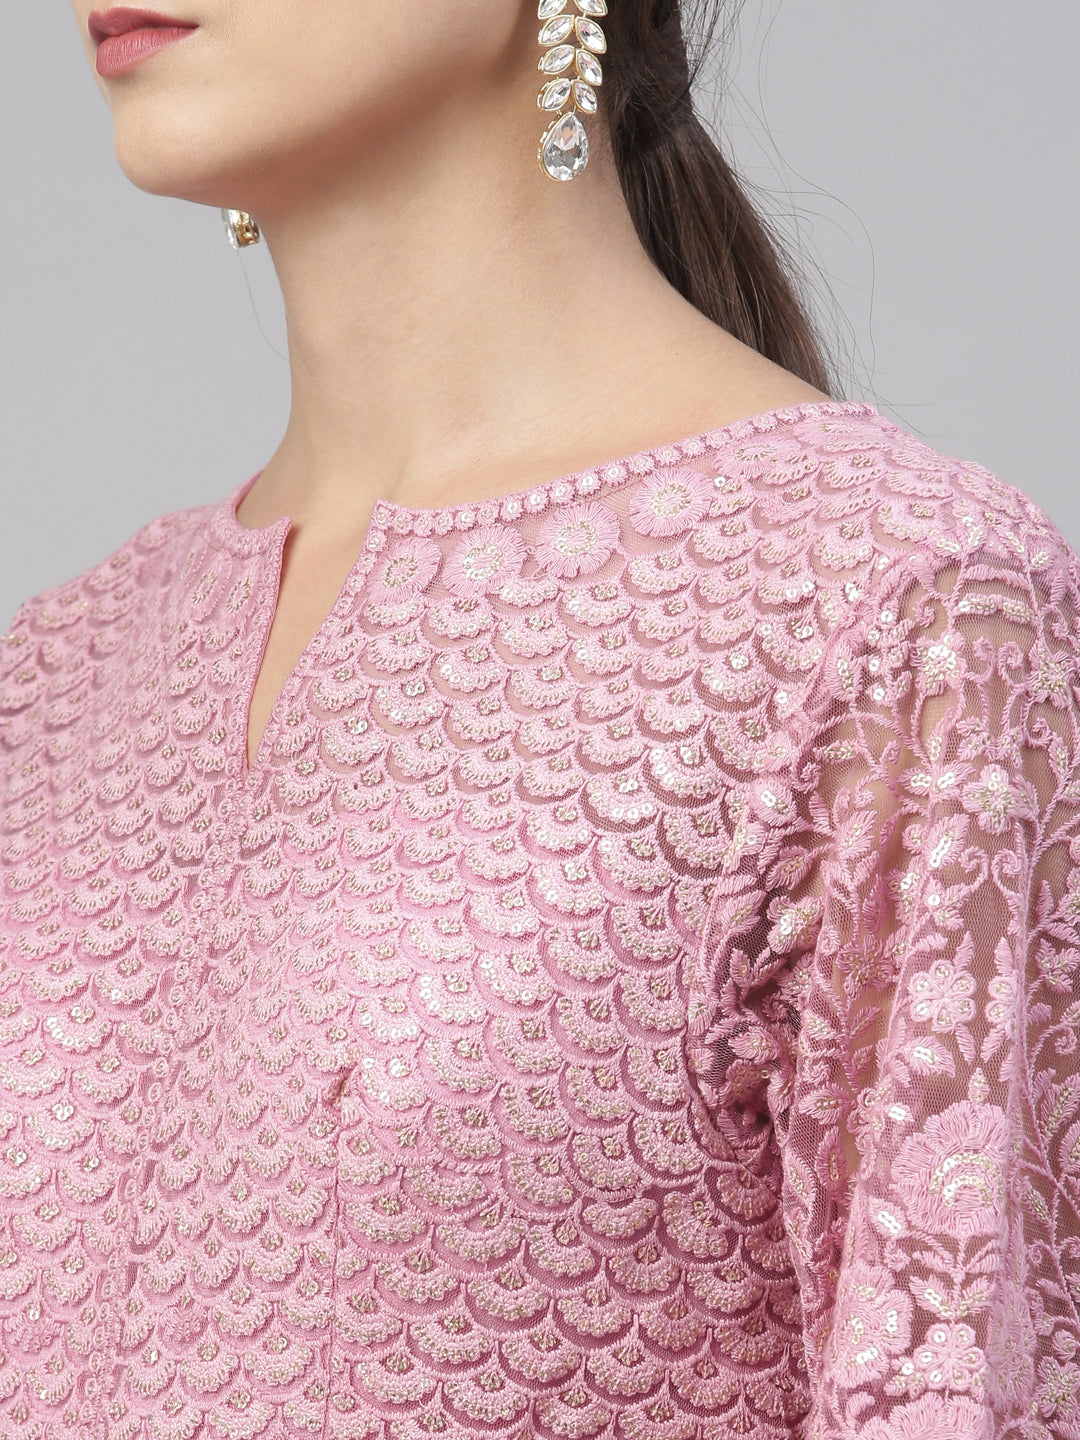 Neeru'S PINK color, NETT fabric Gown